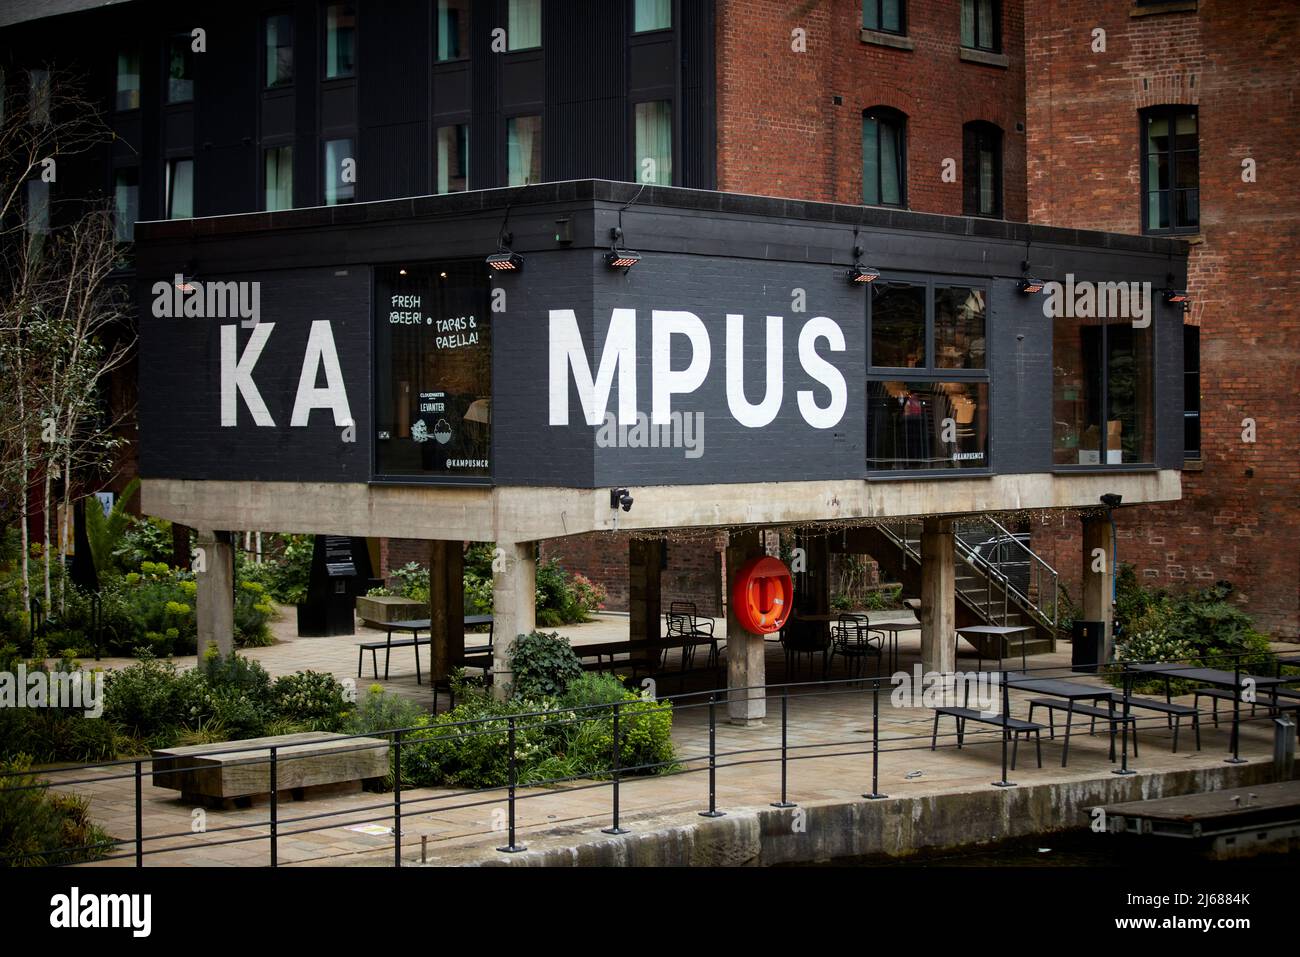 KAMPUS building former Manchester Metropolitan University site on Aytoun Street. Stock Photo